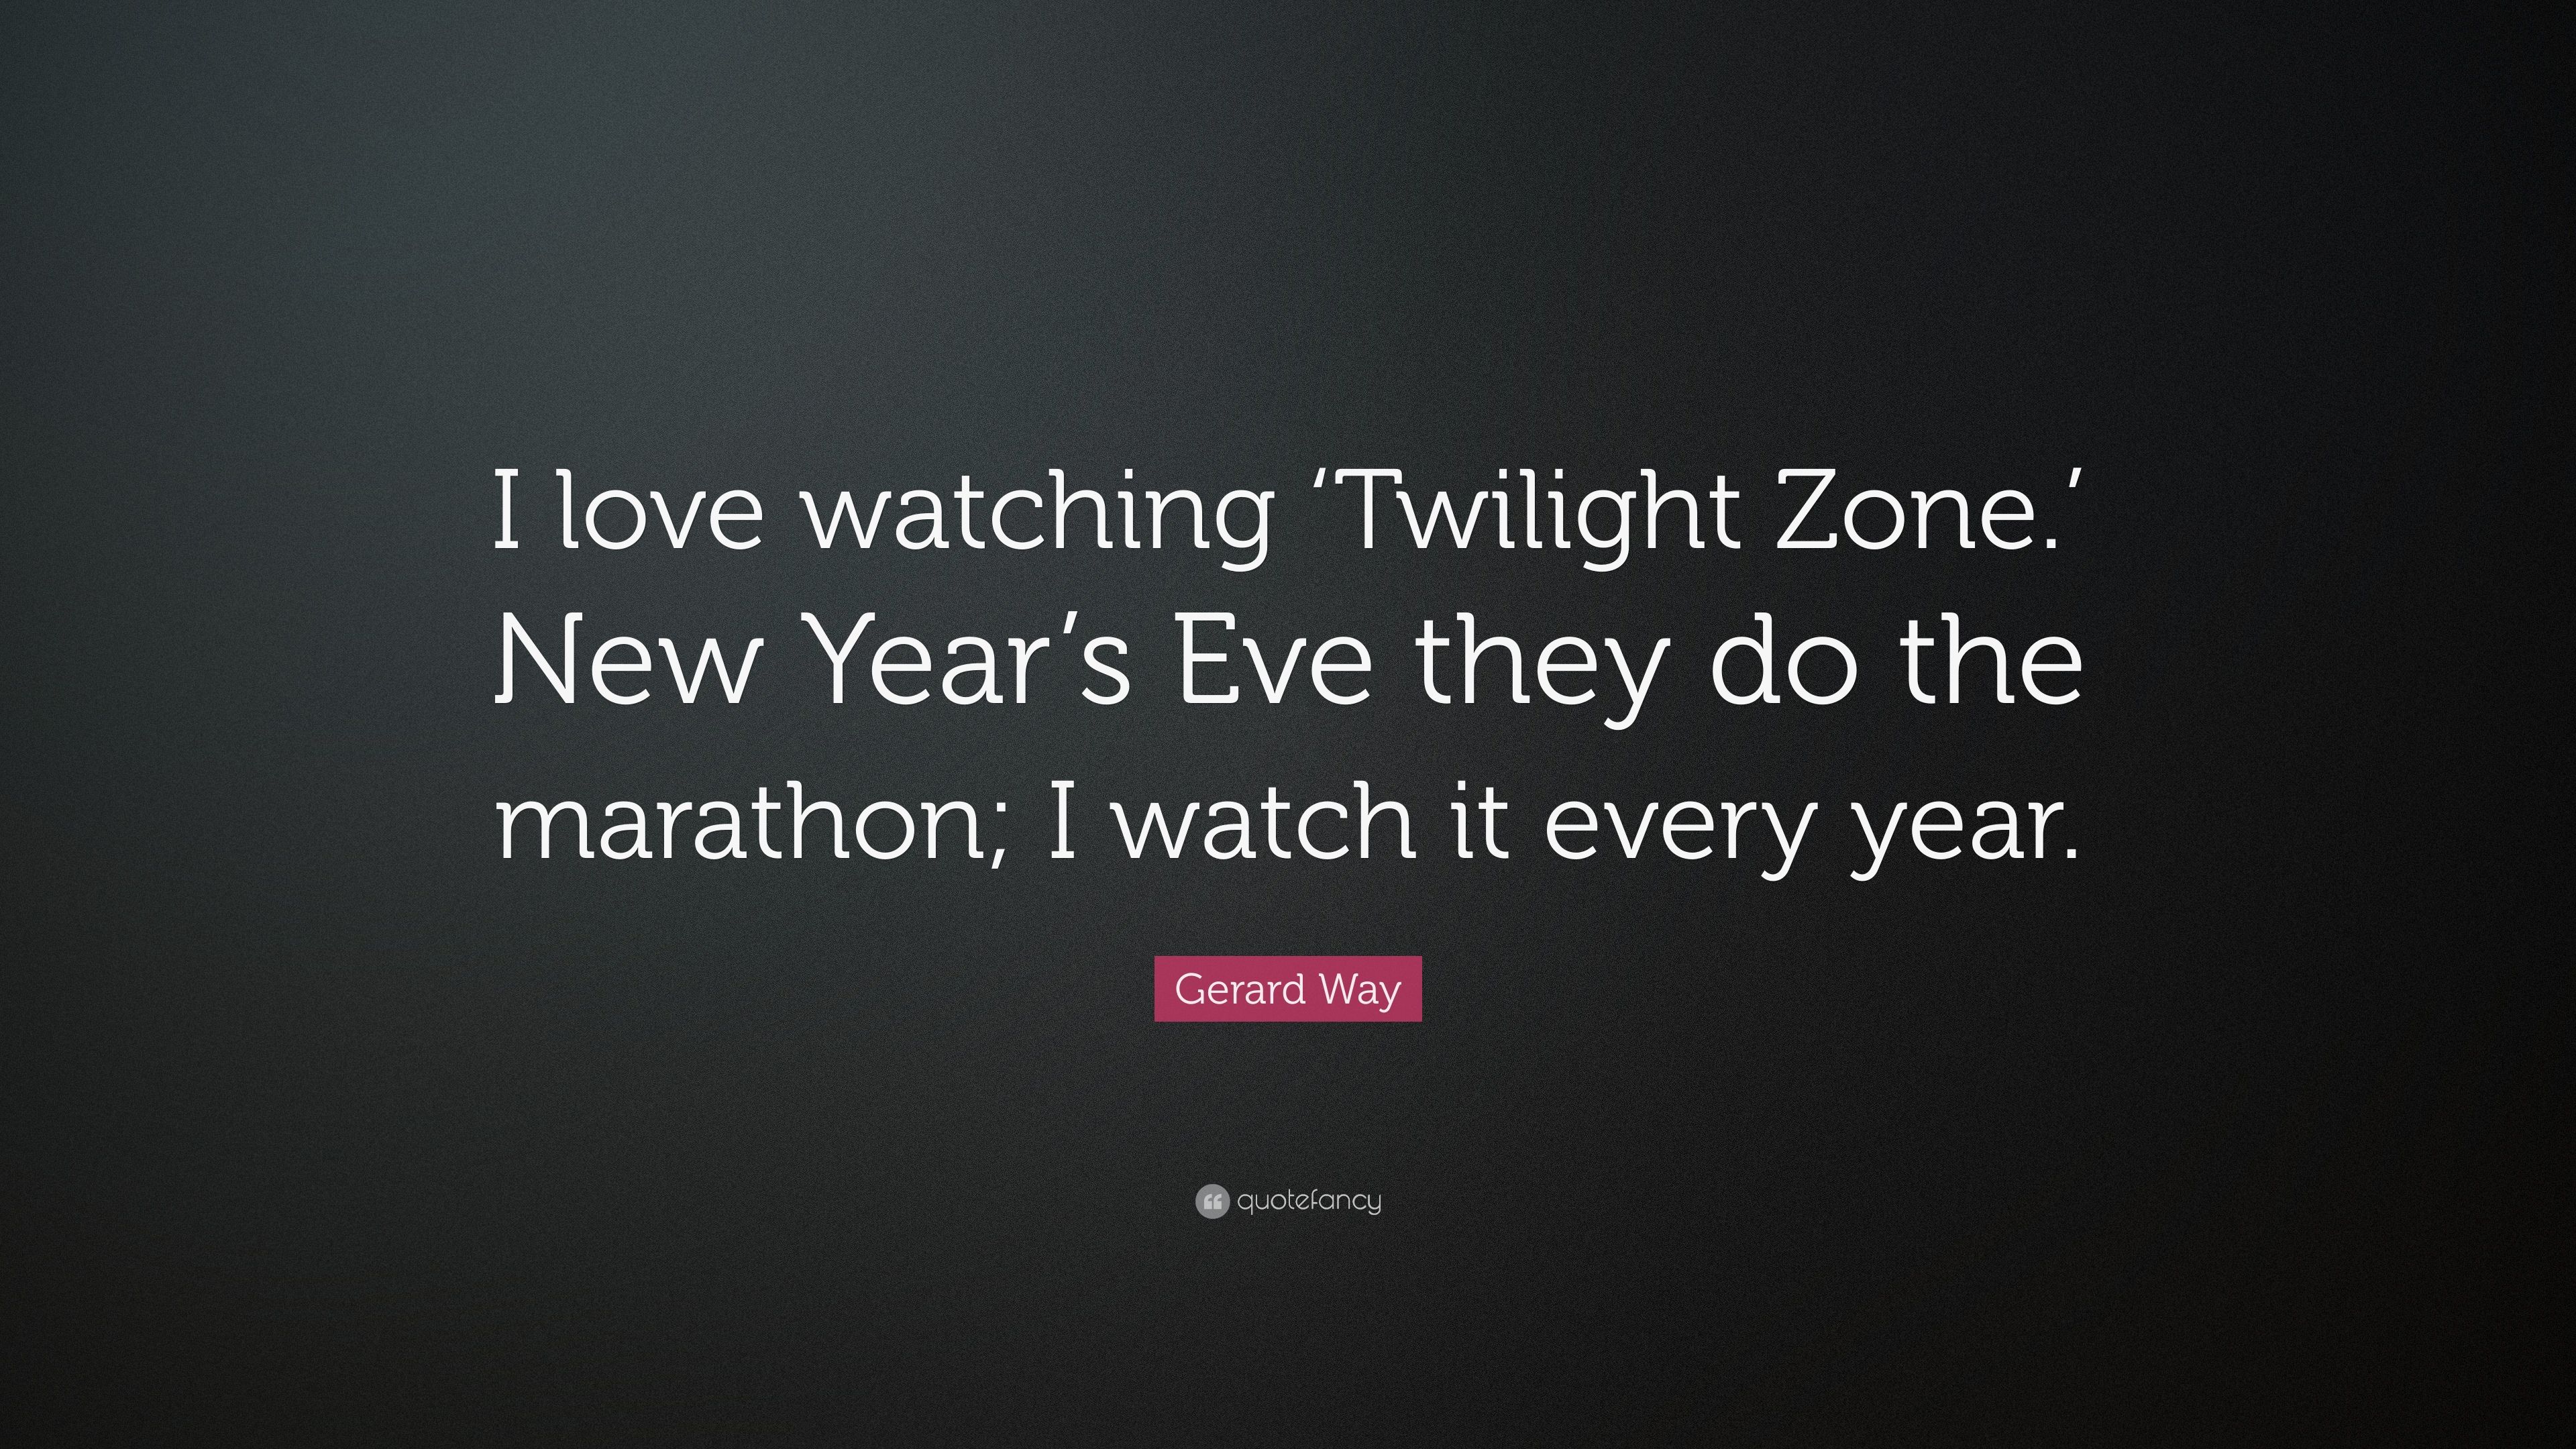 Gerard Way Quote: “I love watching 'Twilight Zone.' New Year's Eve